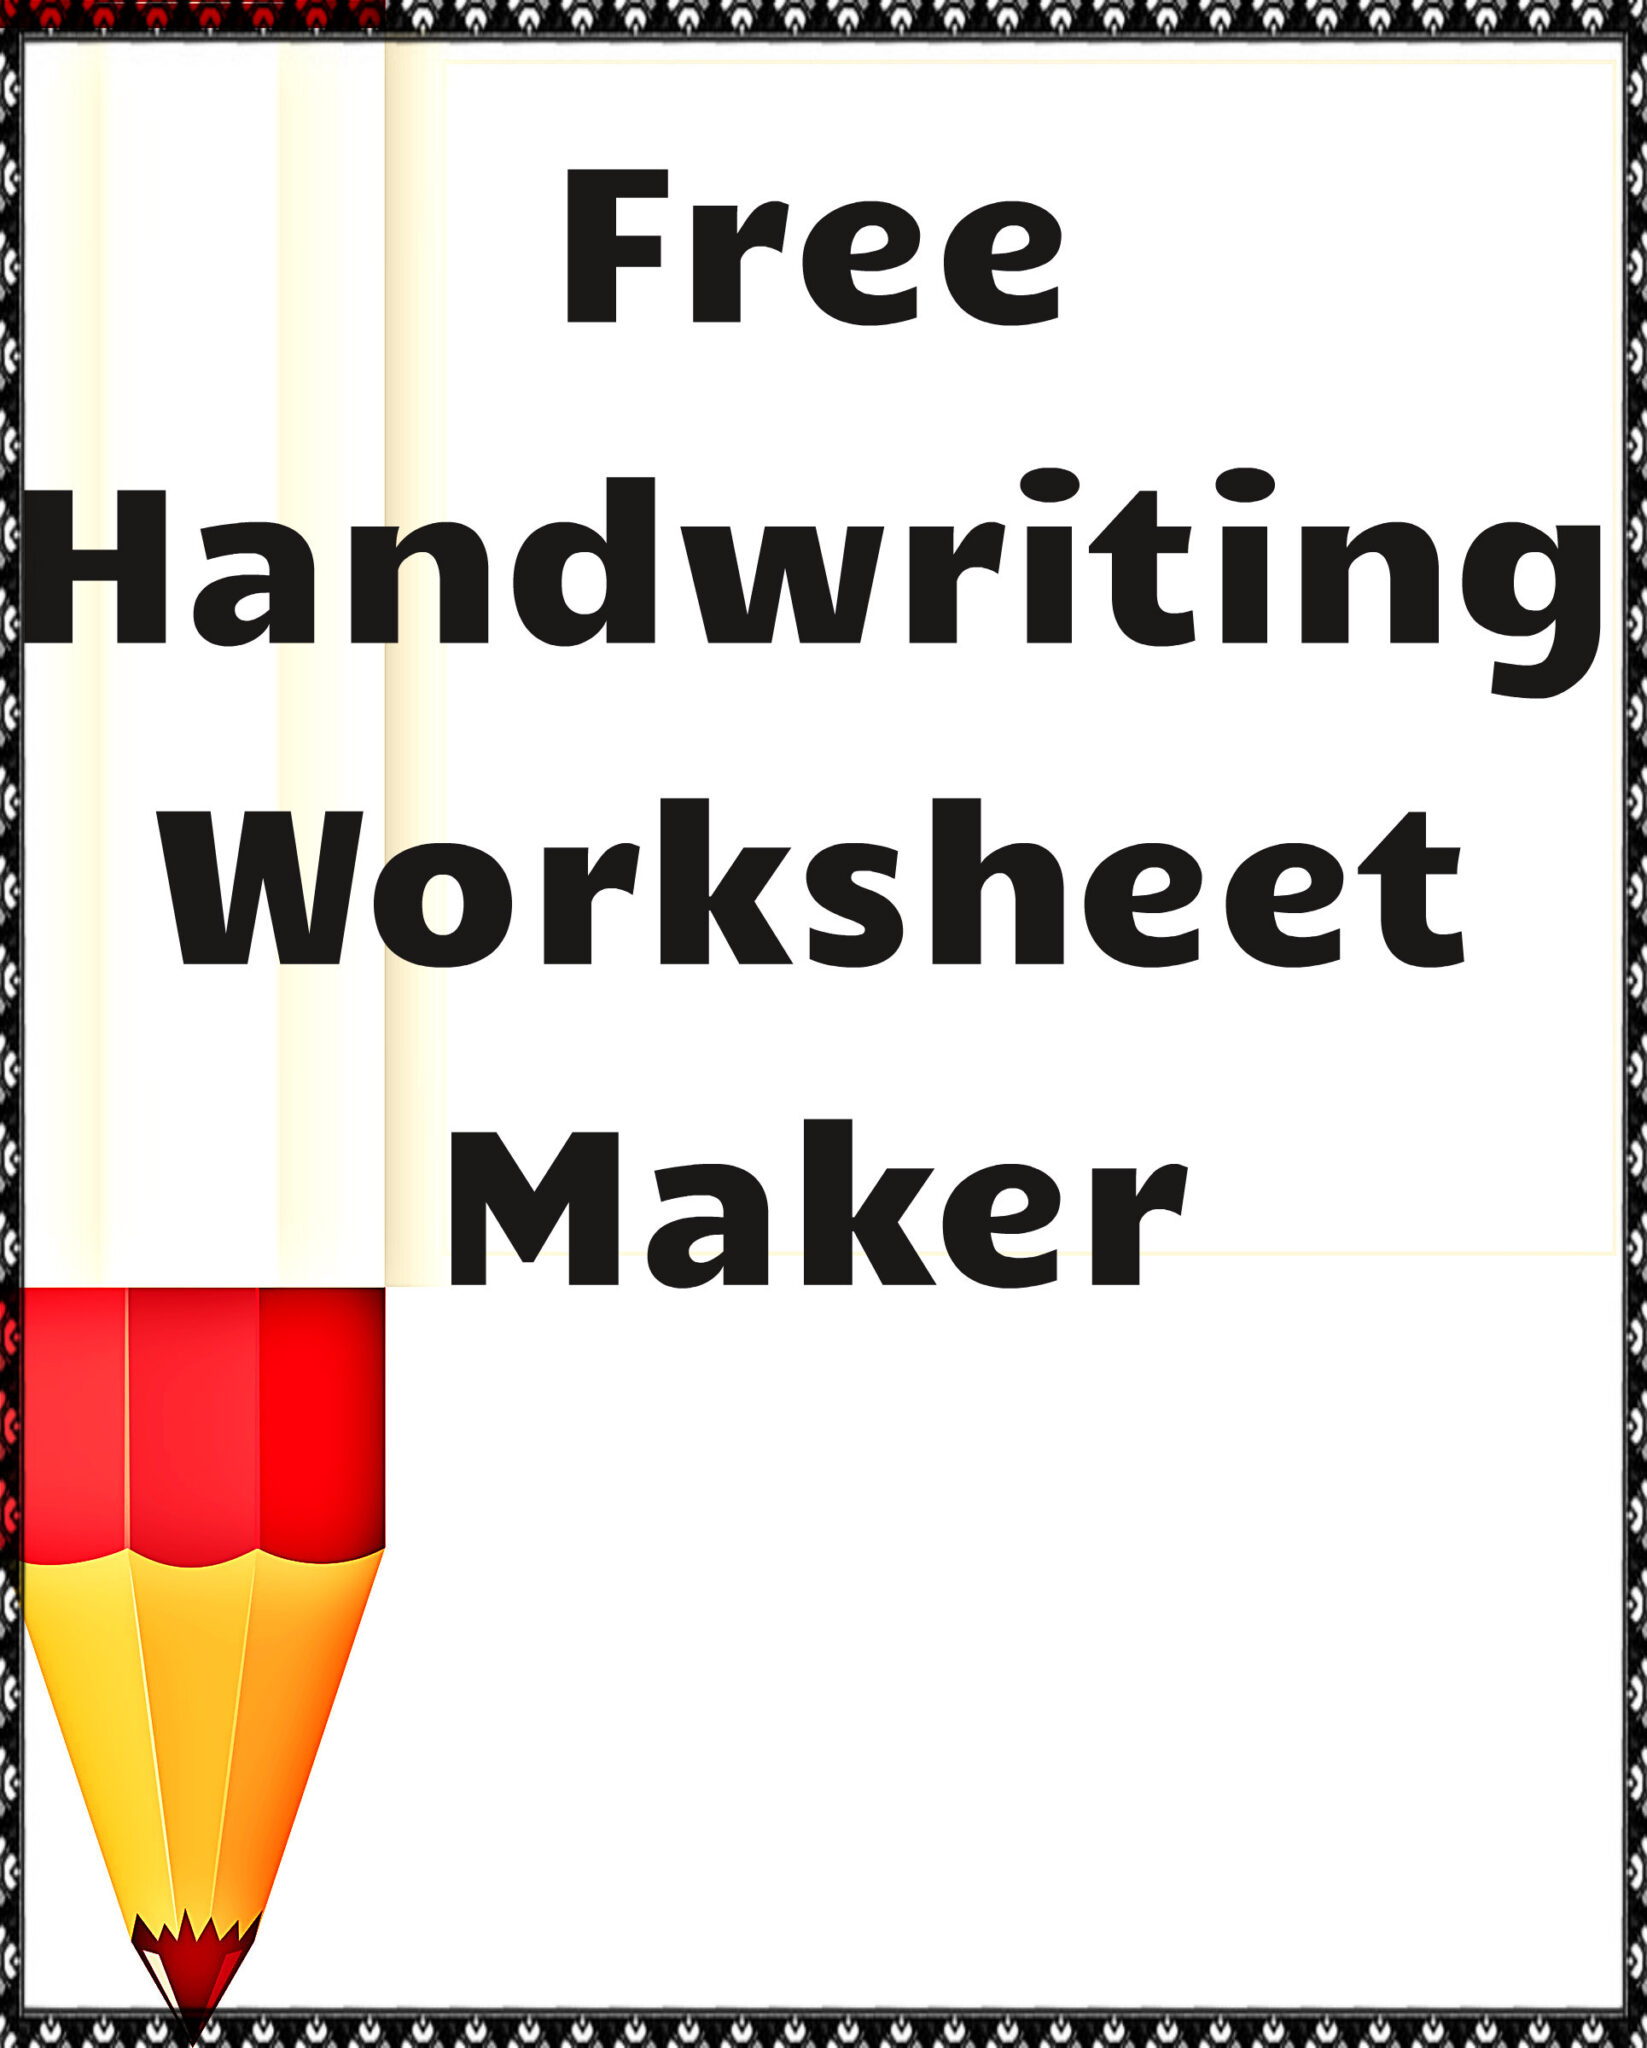 handwriting-worksheet-maker-free-classroom-tools